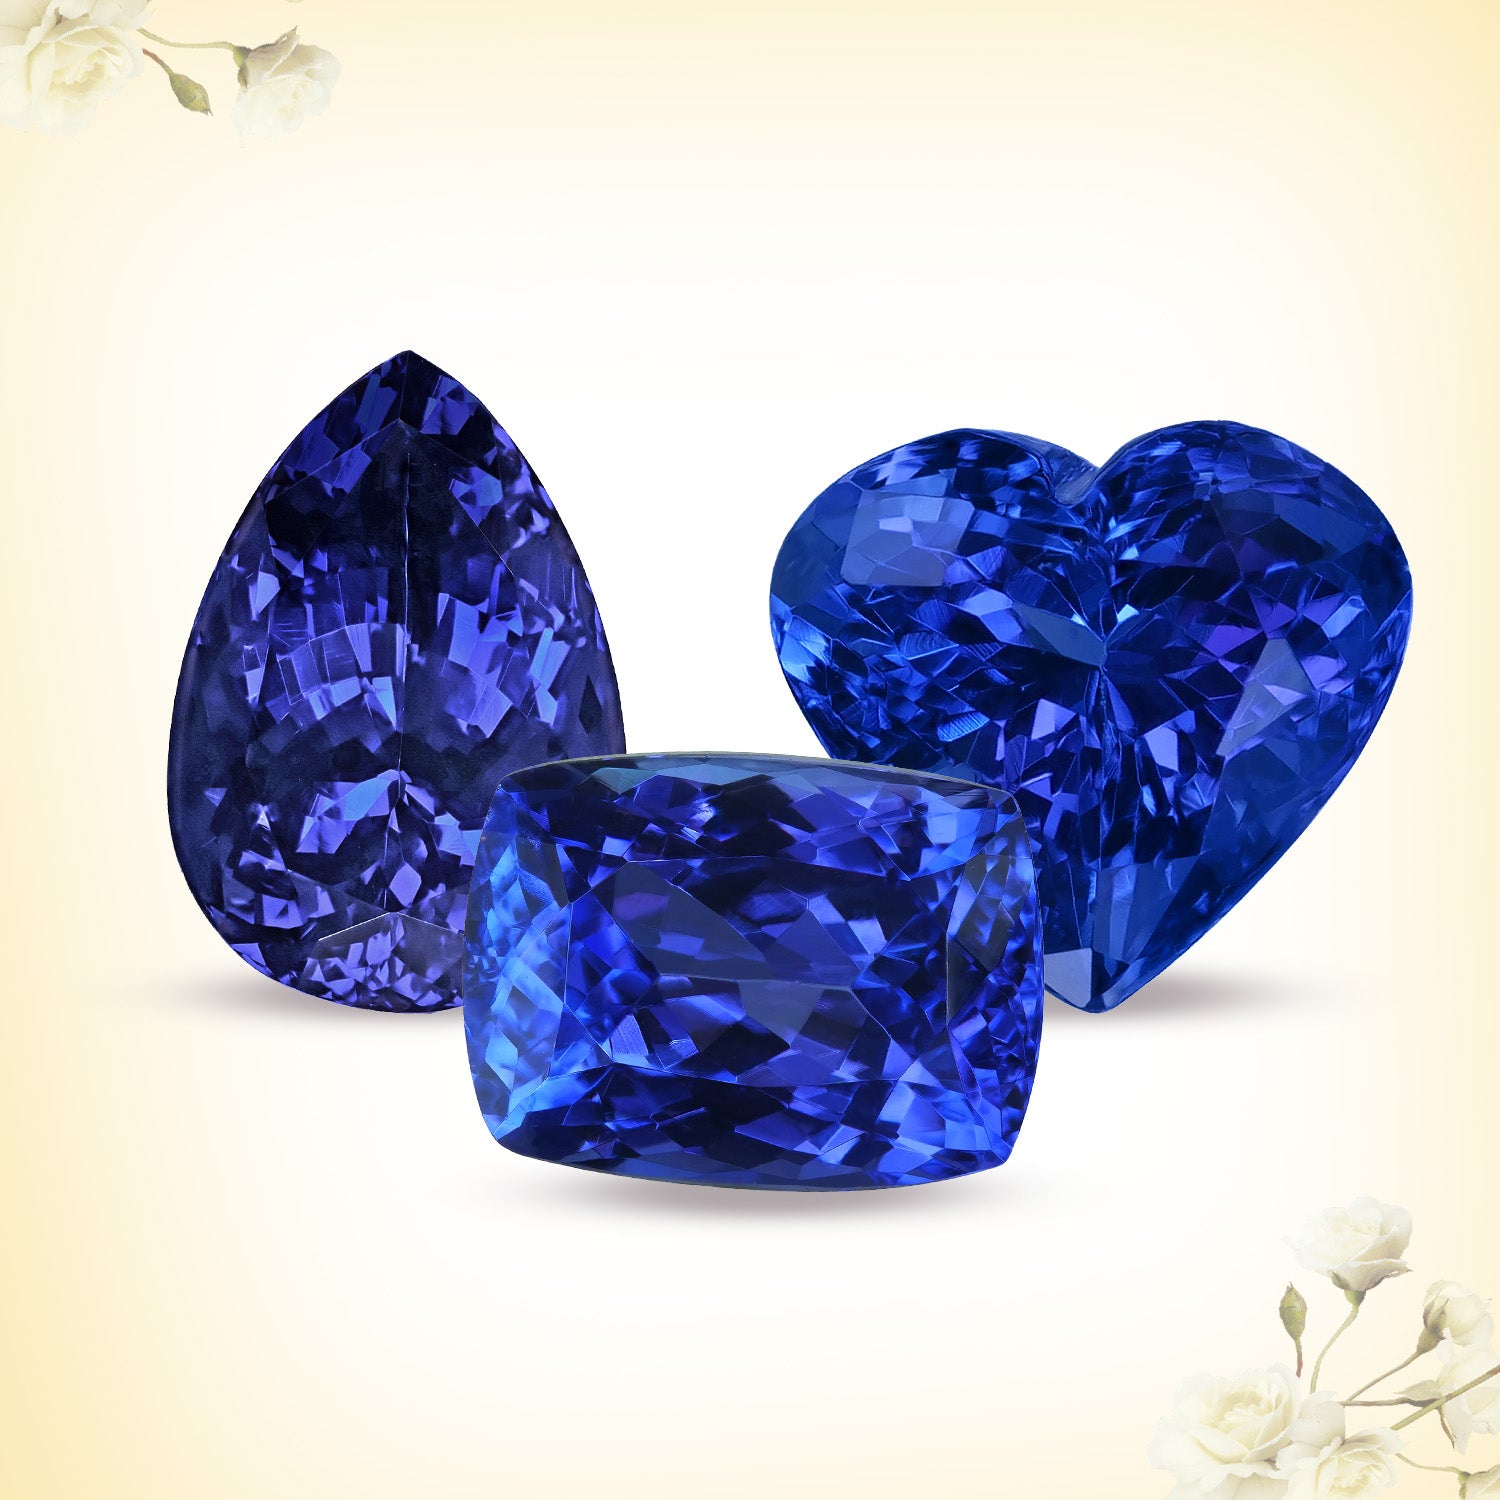 5 Key Benefits of Owning a Blue Gemstone